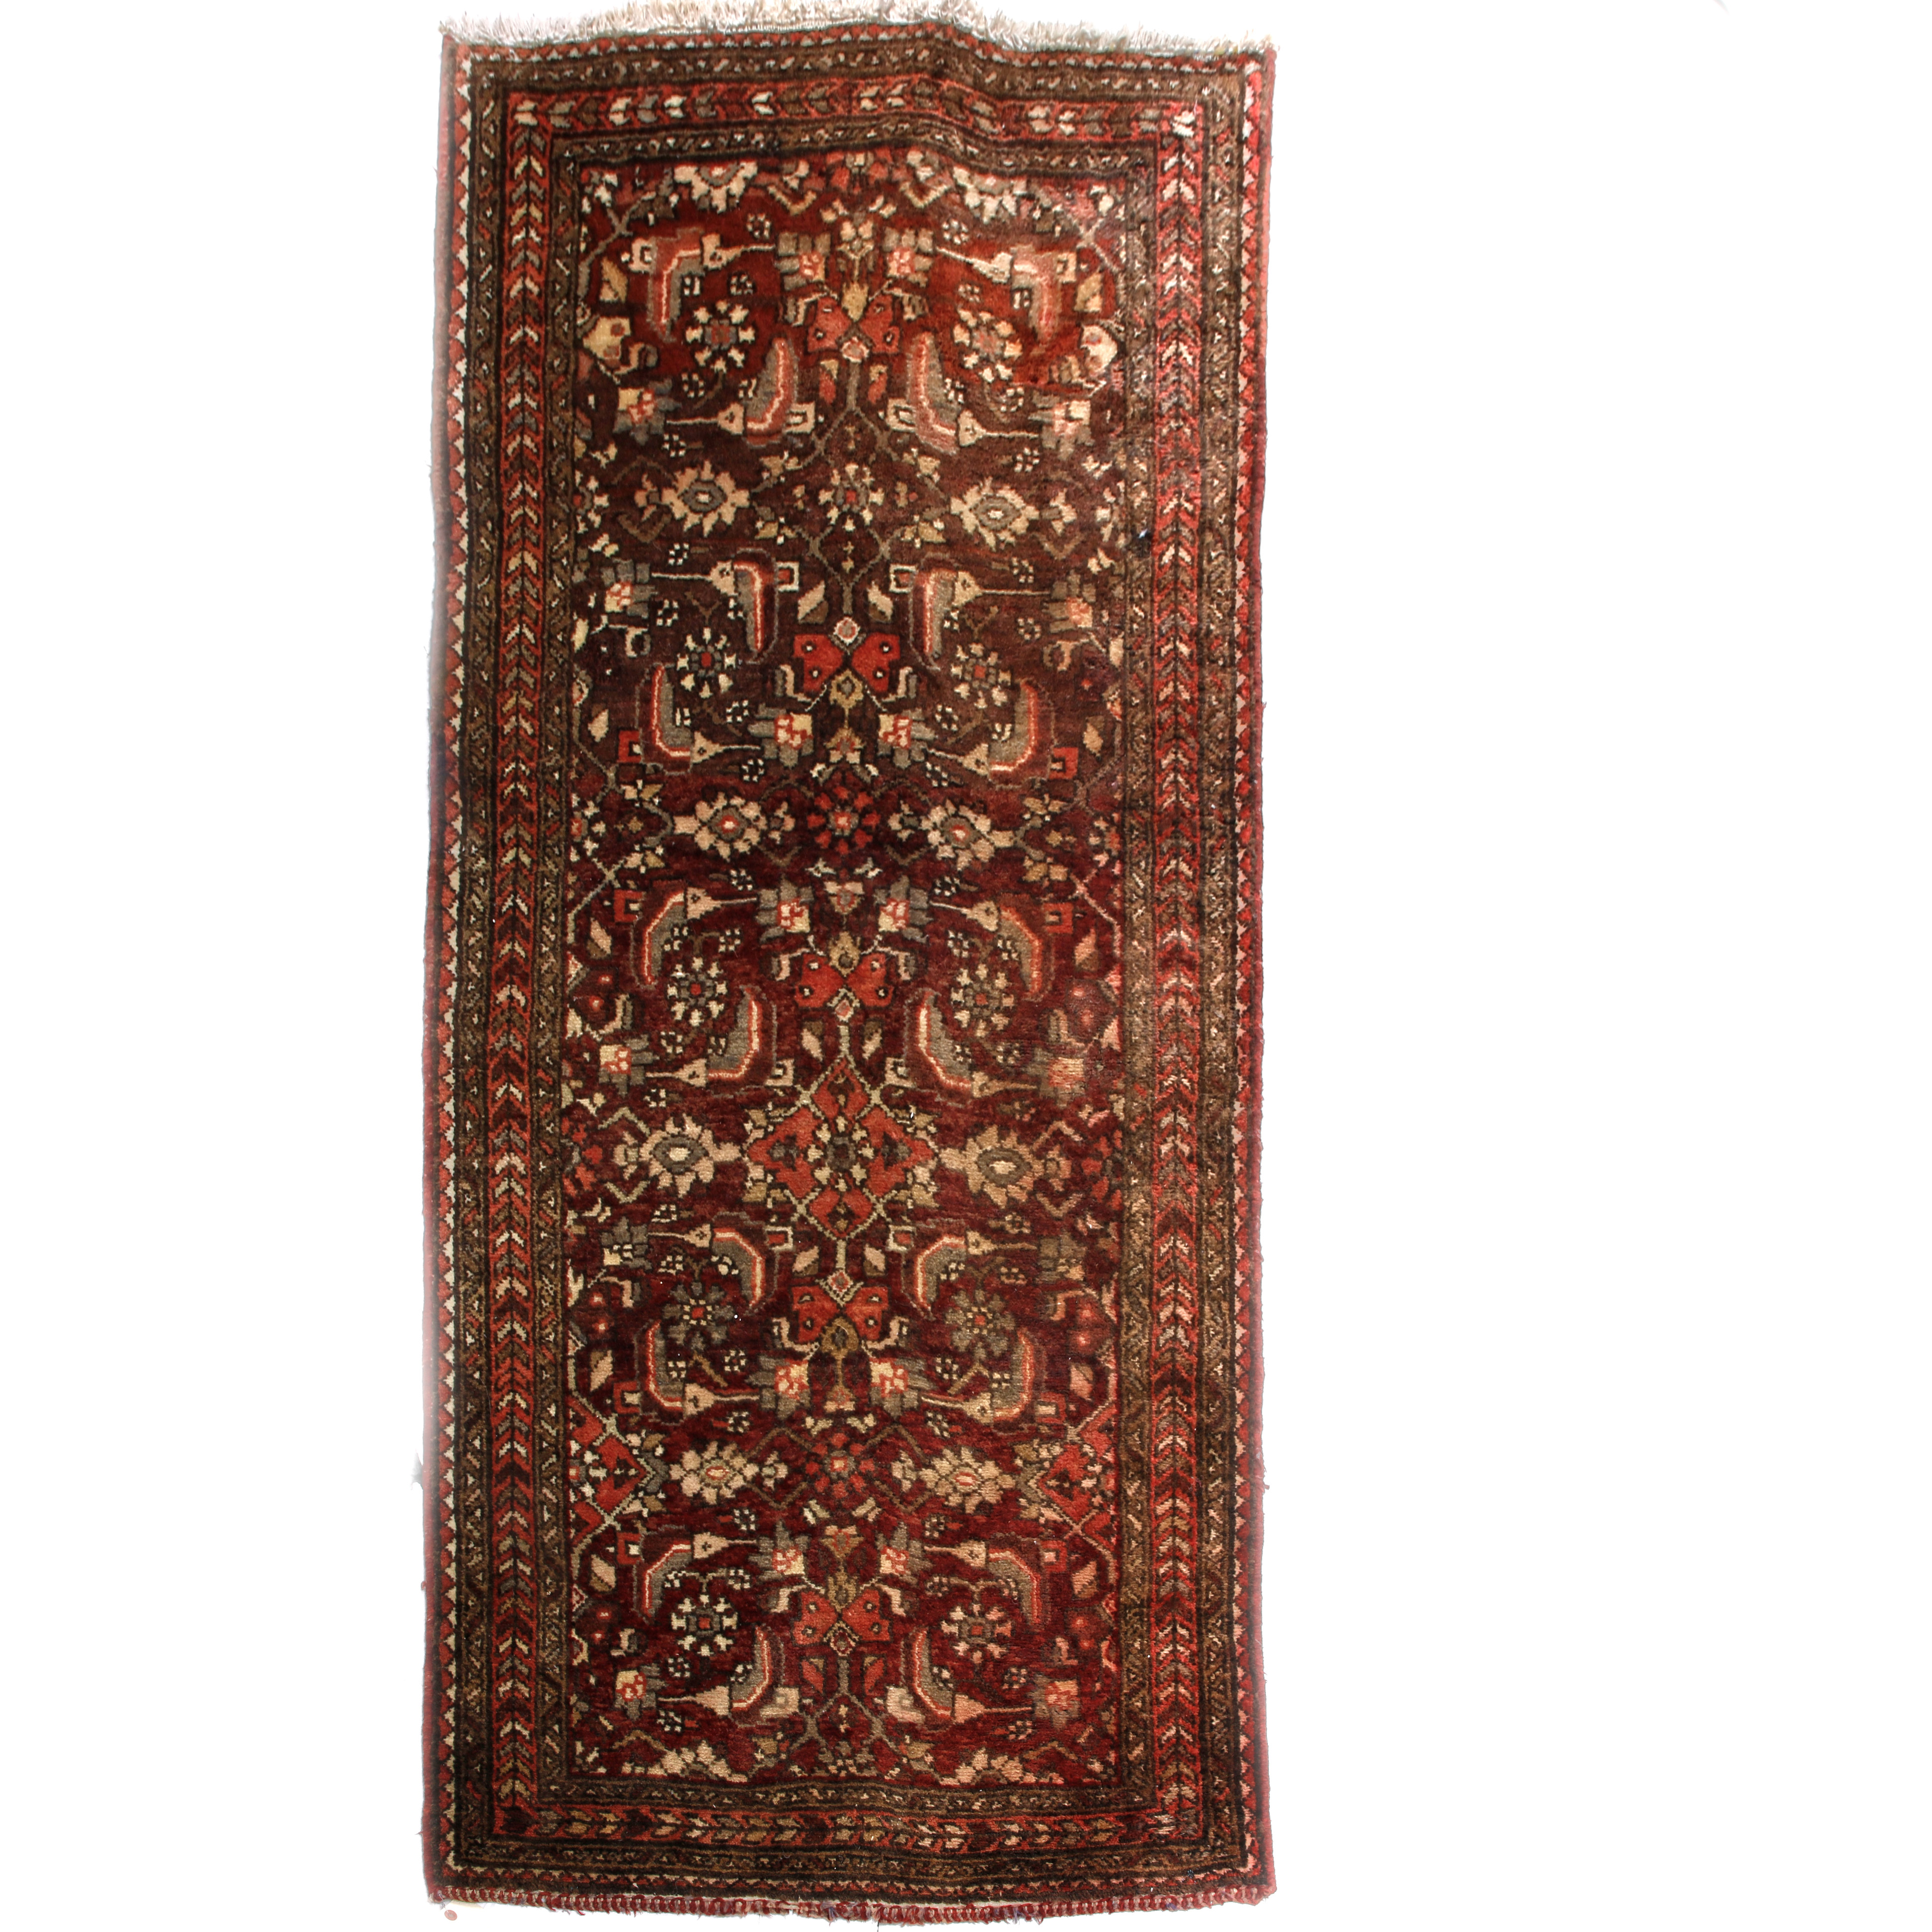 TURKISH CARPET Turkish carpet  3a4d86